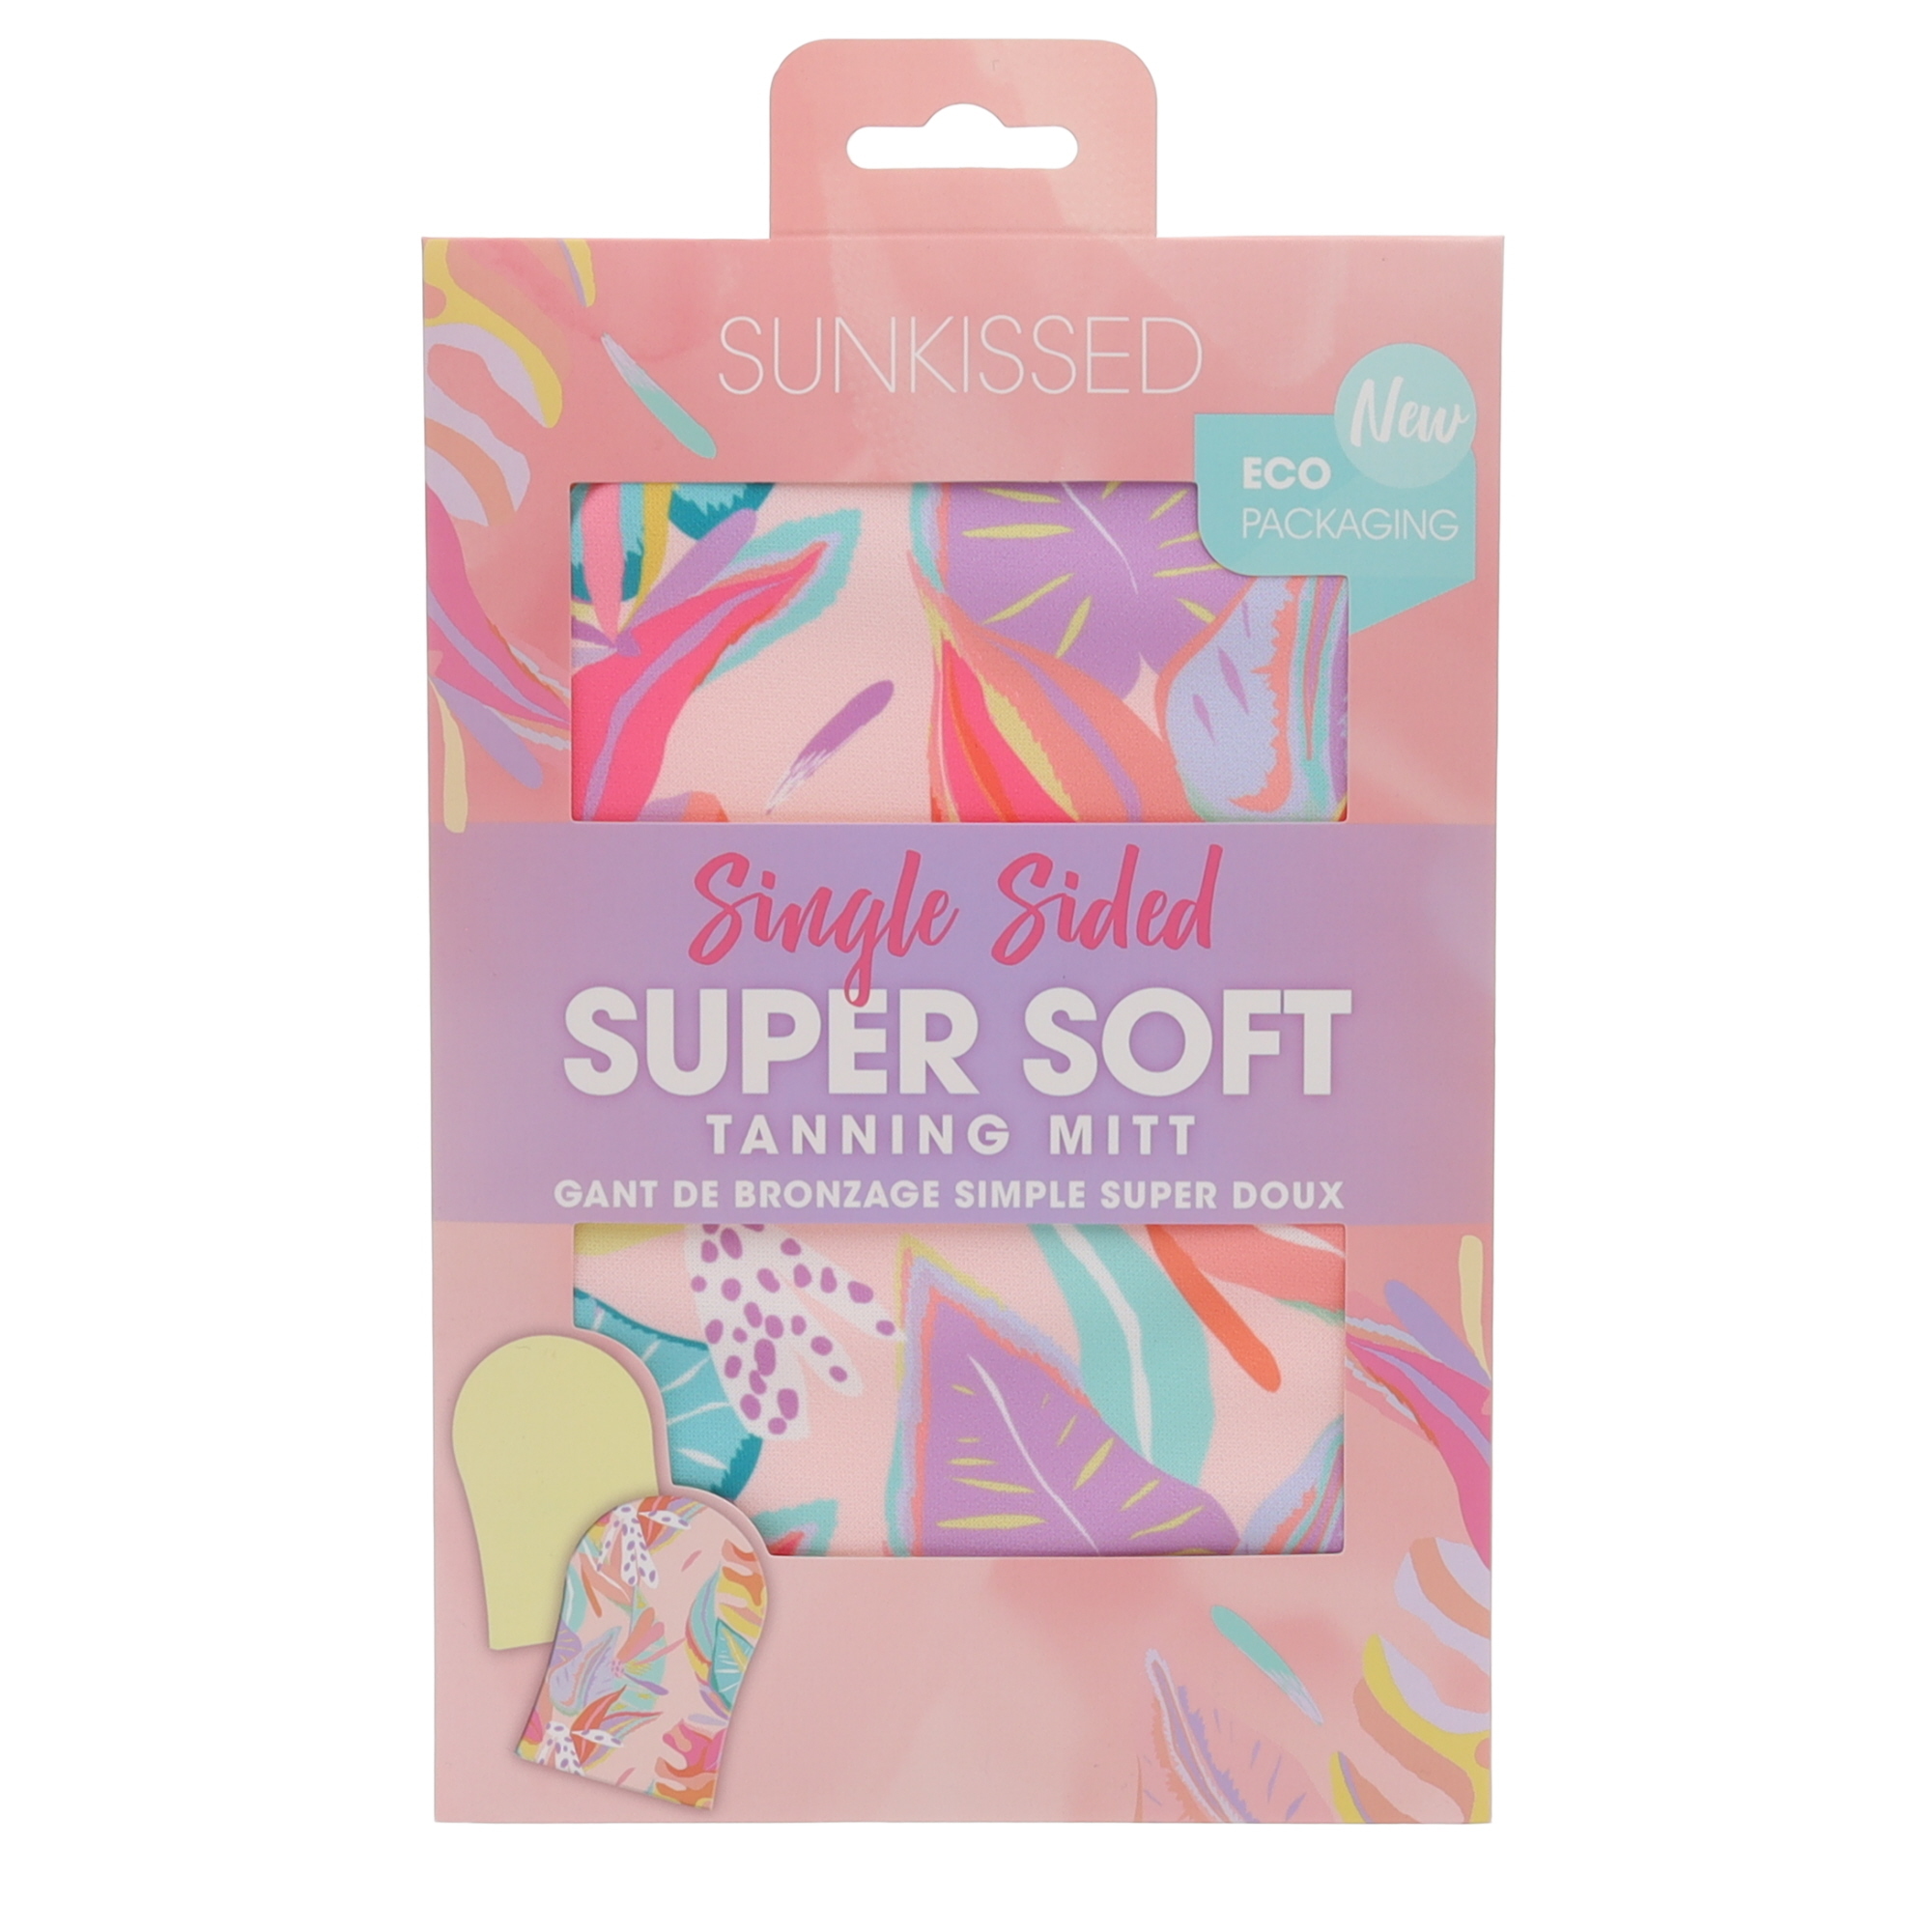 SUNKISSED Aplikační rukavice Super Soft Single Sided (Tanning Mitt)